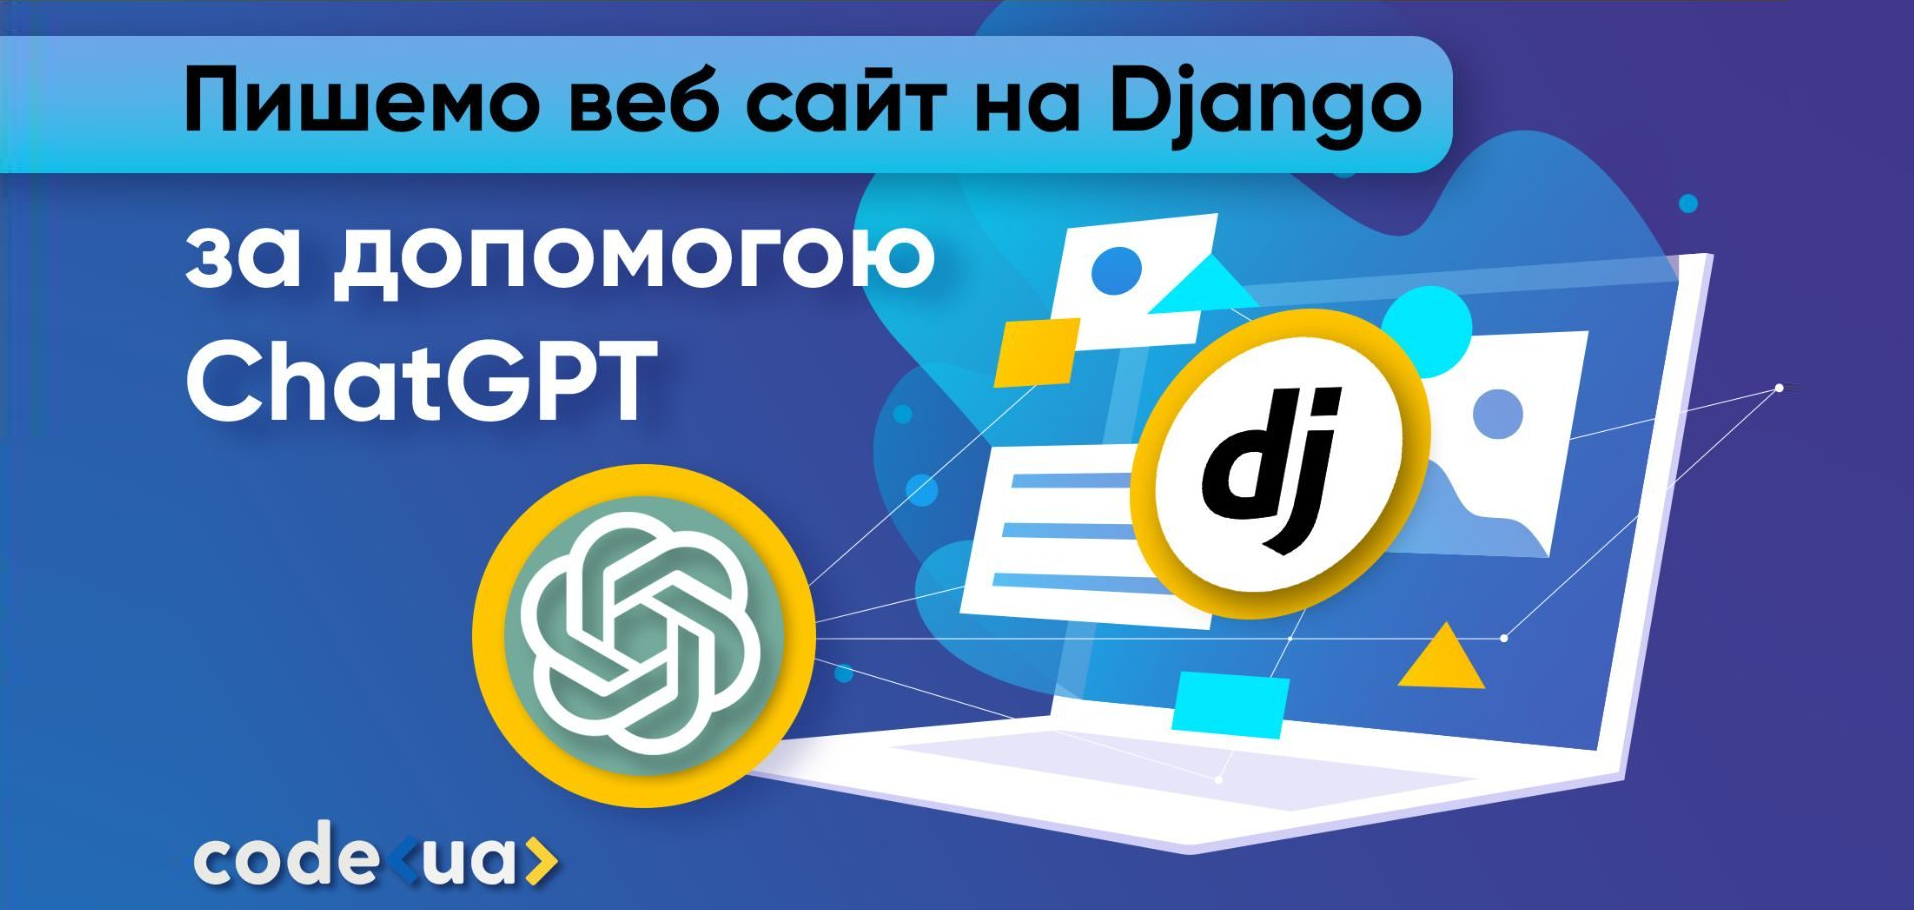 Пишемо веб-сайт на Django за допомогою ChatGPT